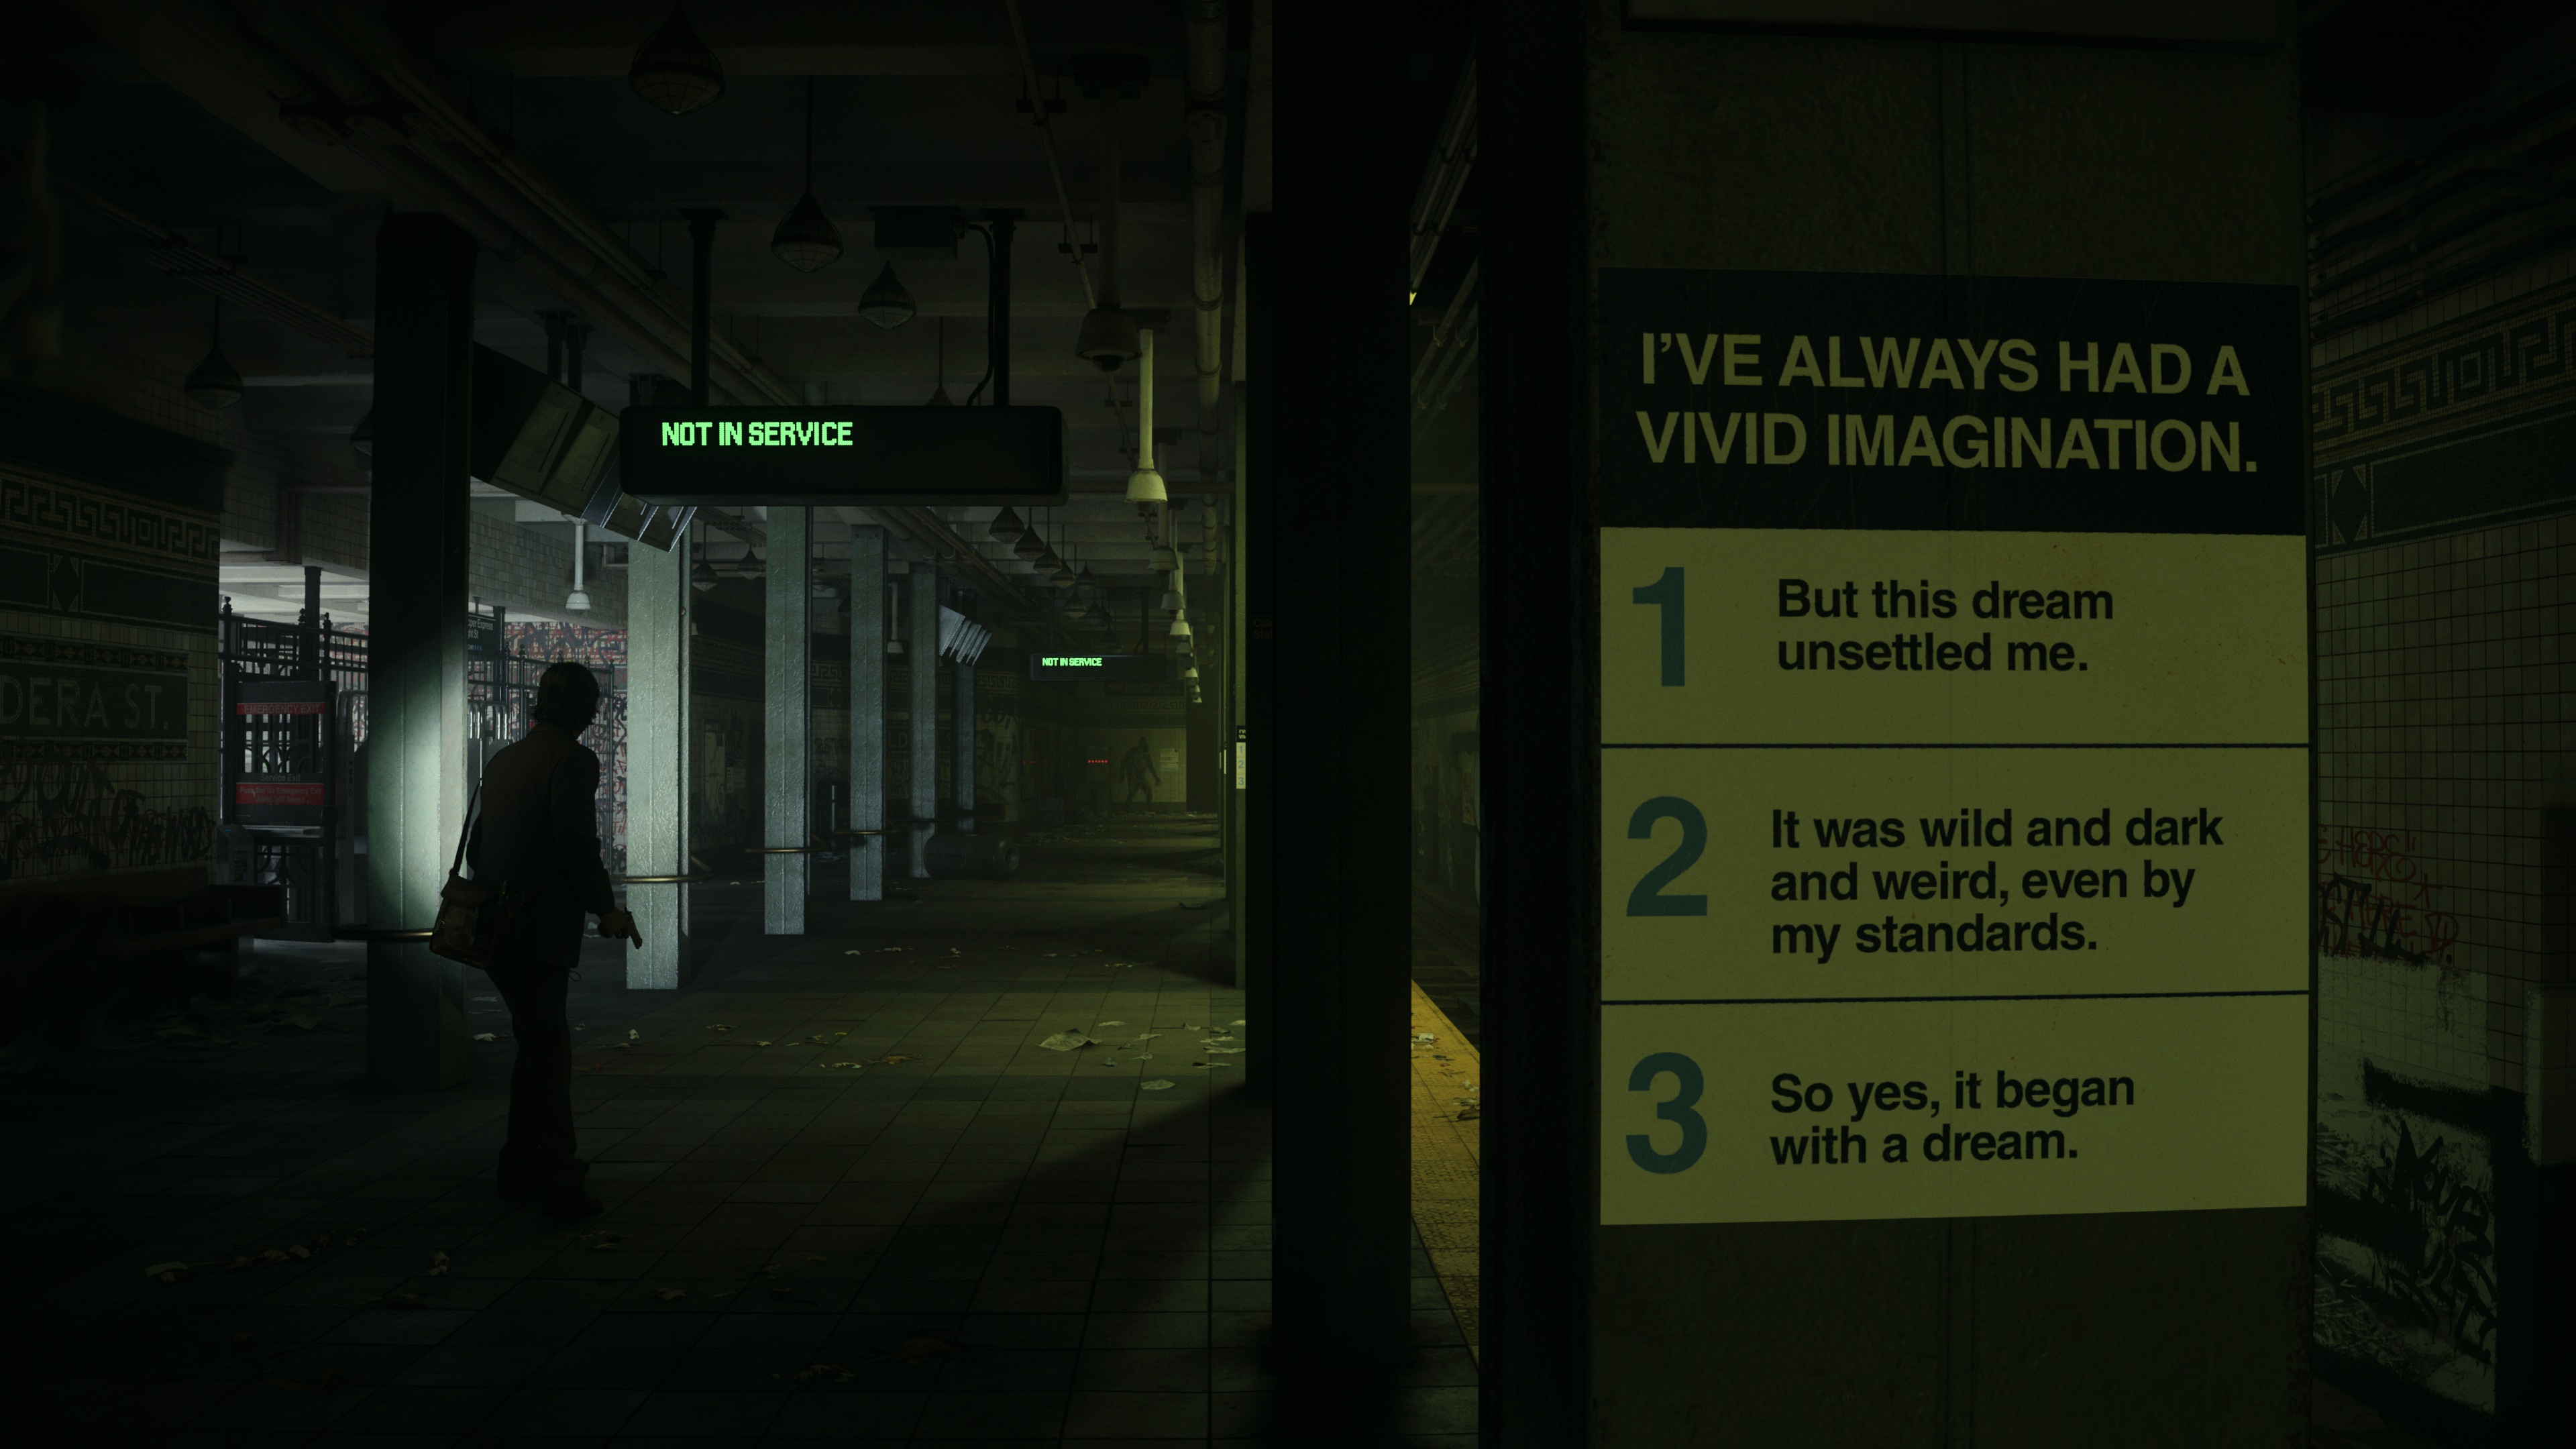 Скриншот Alan Wake 2, на котором изображен Алан Уэйк, исследующий туннели метро с логикой сновидений, нацарапанной на стенах